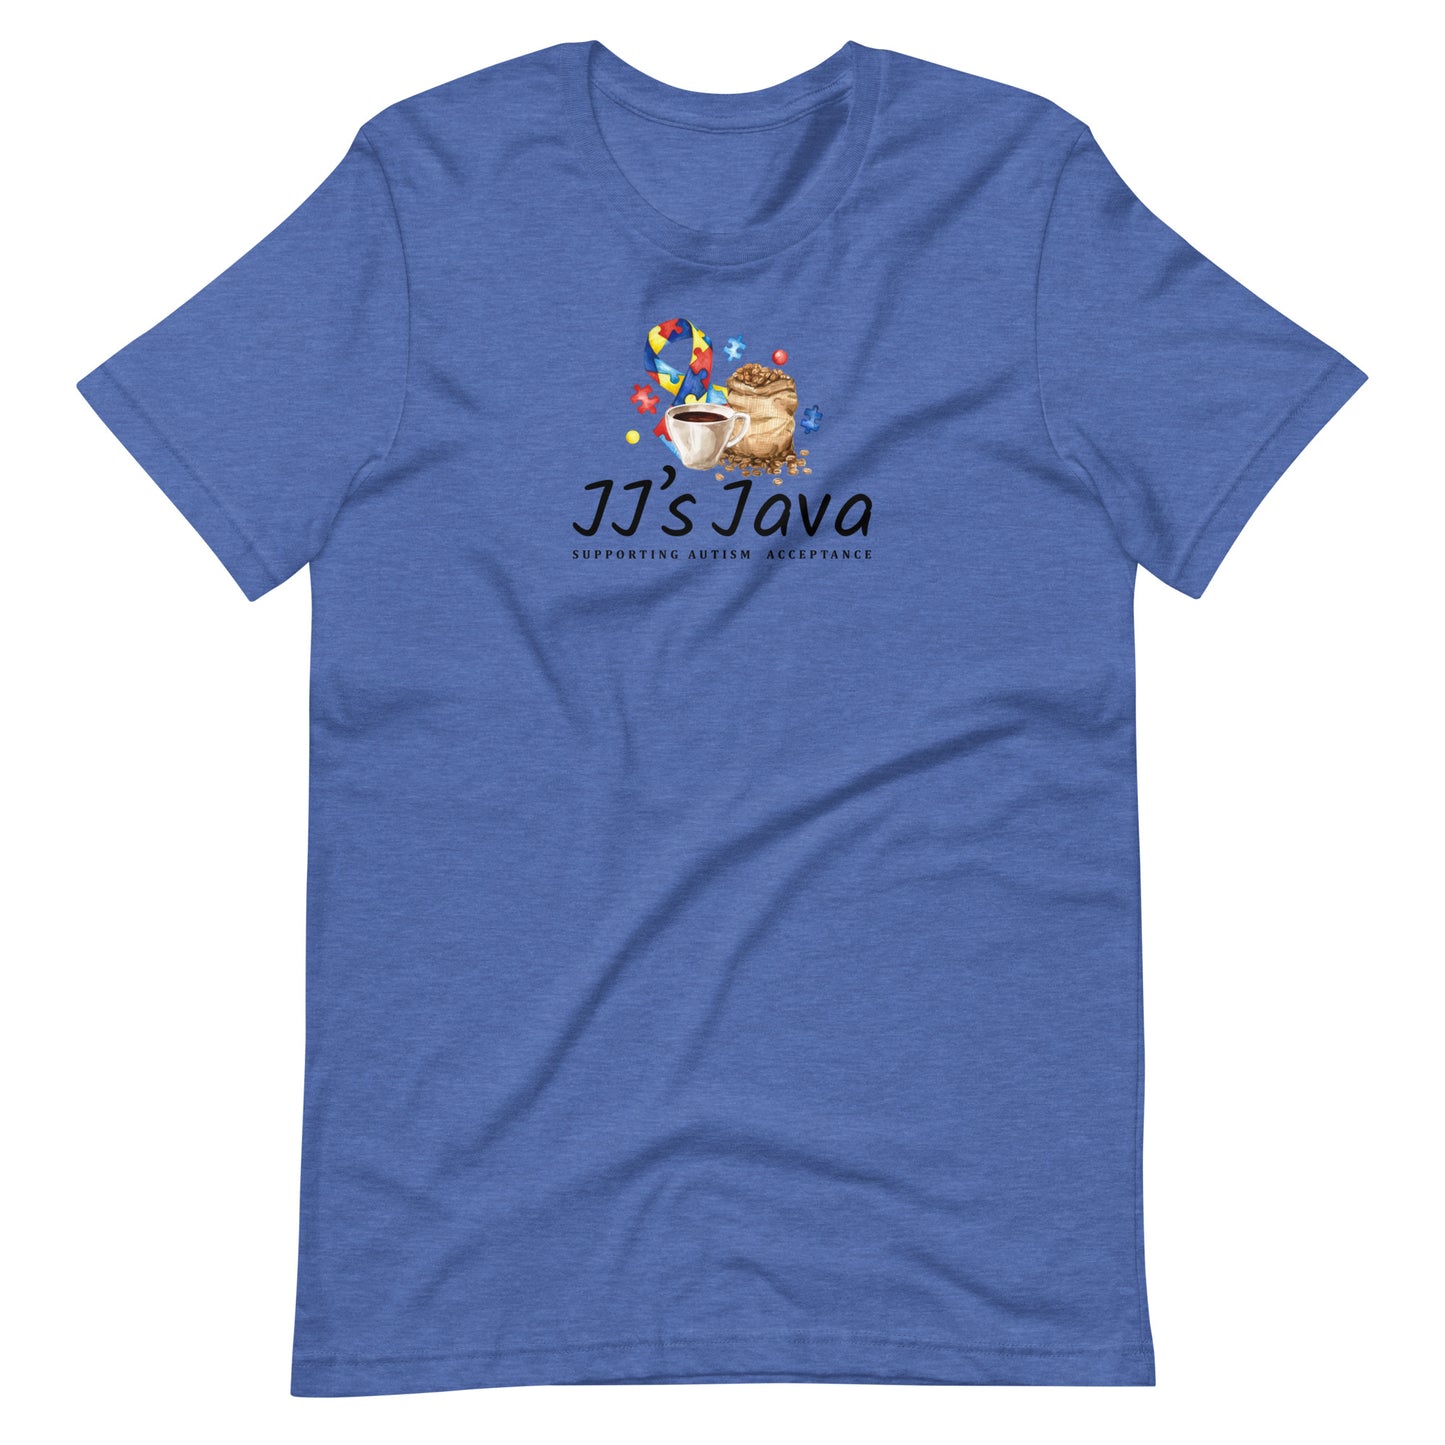 JJ's Java unisex t-shirt